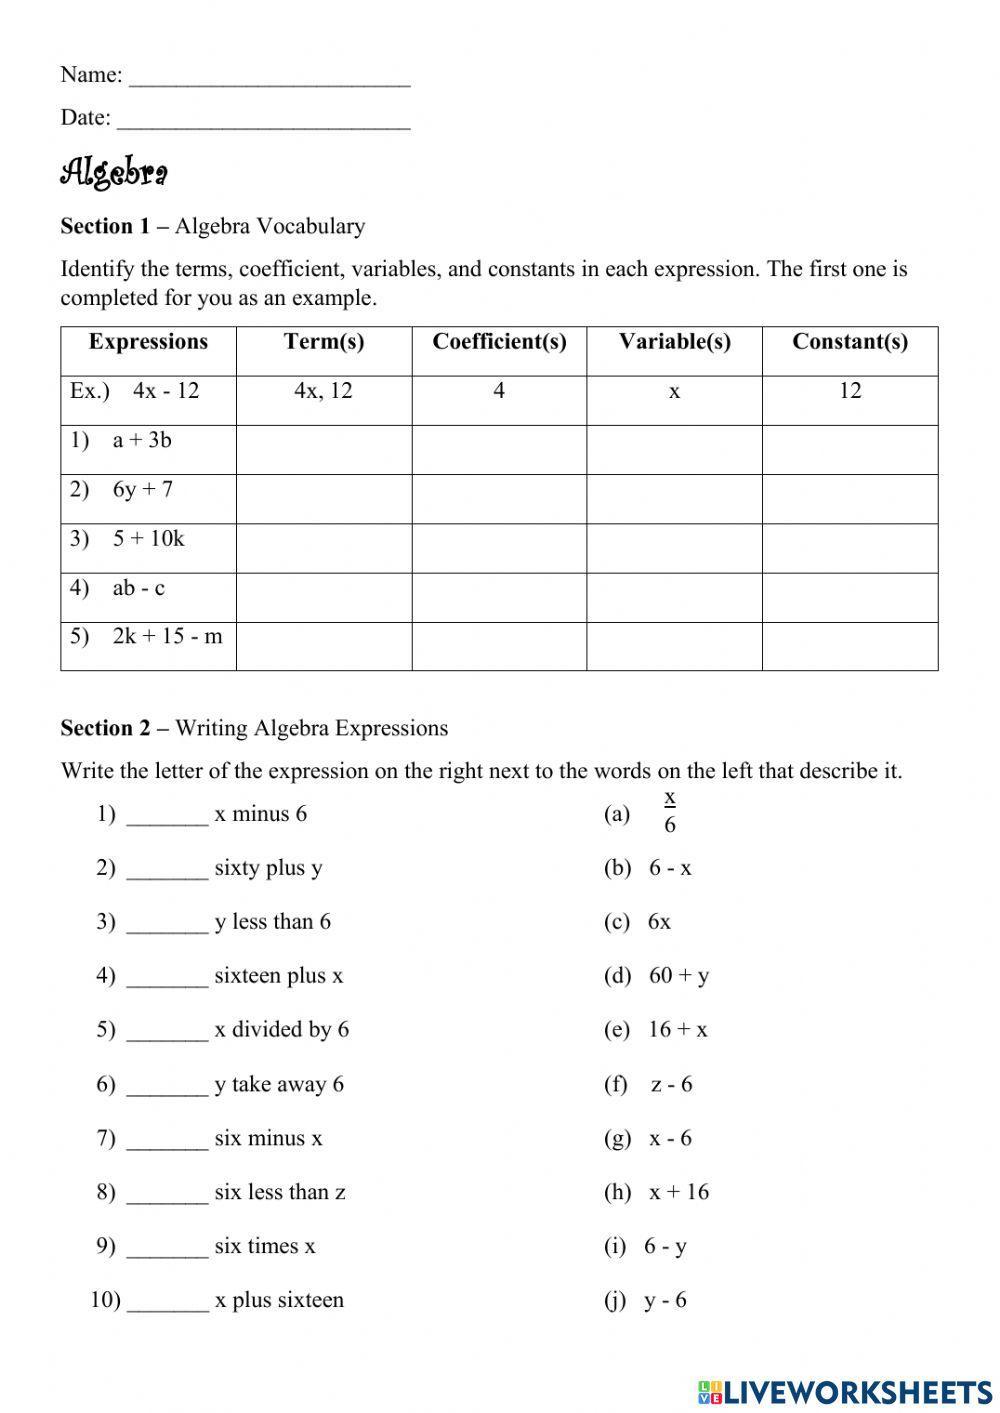 Algebra Vocabulary and Writing Expressions